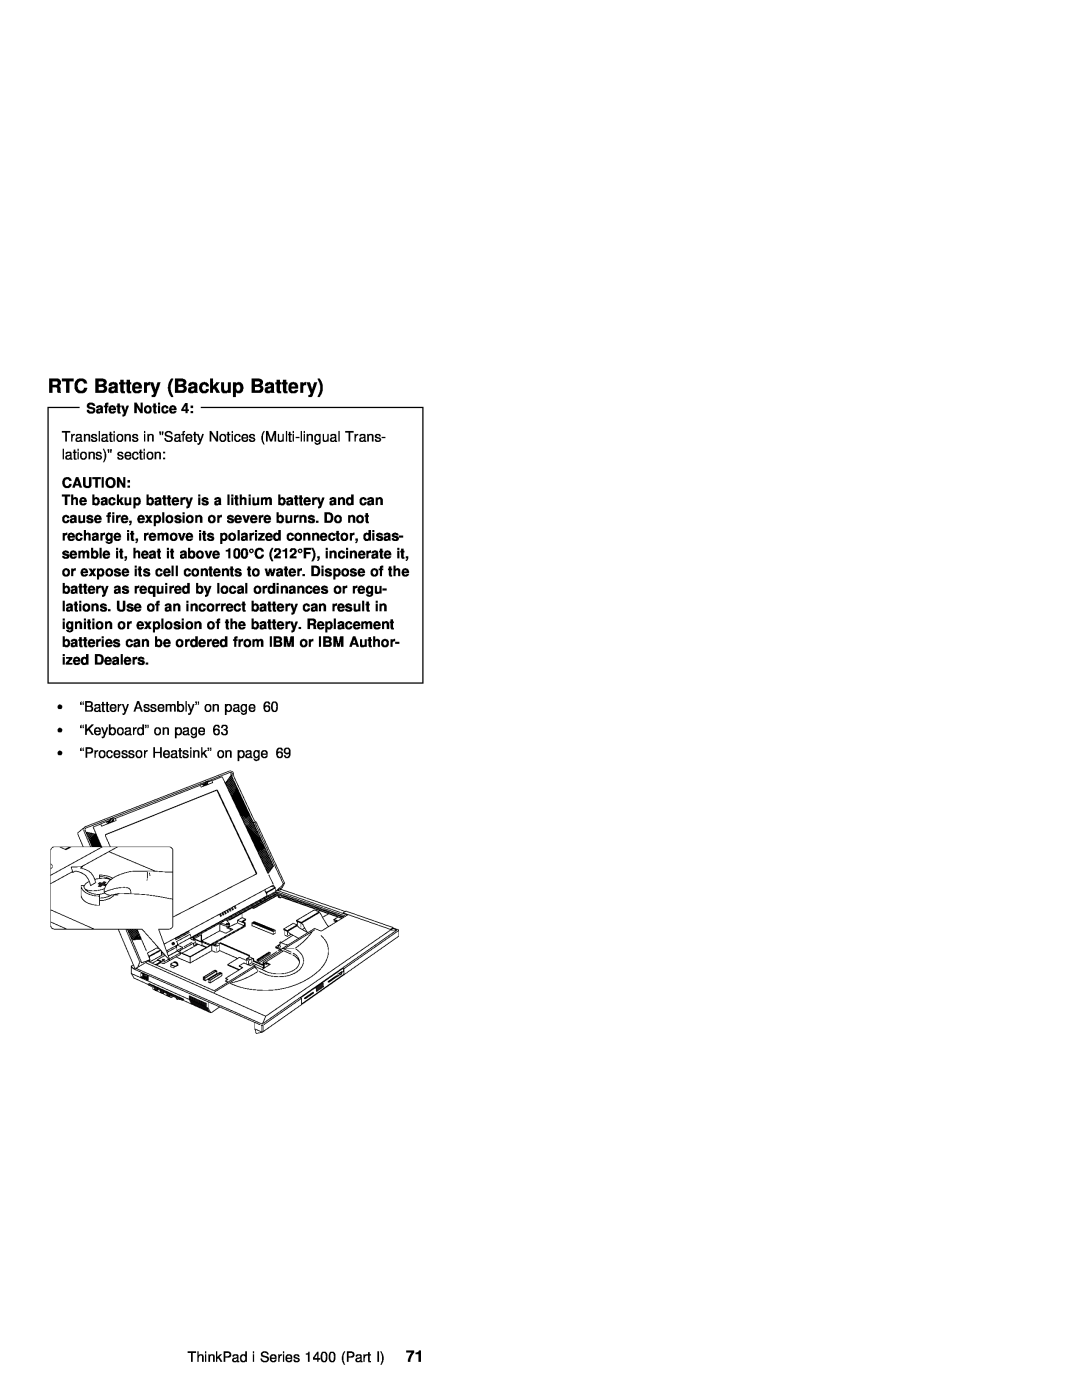 IBM 1400 (2611) manual RTC Battery Backup Battery, severe burns, Dealers 